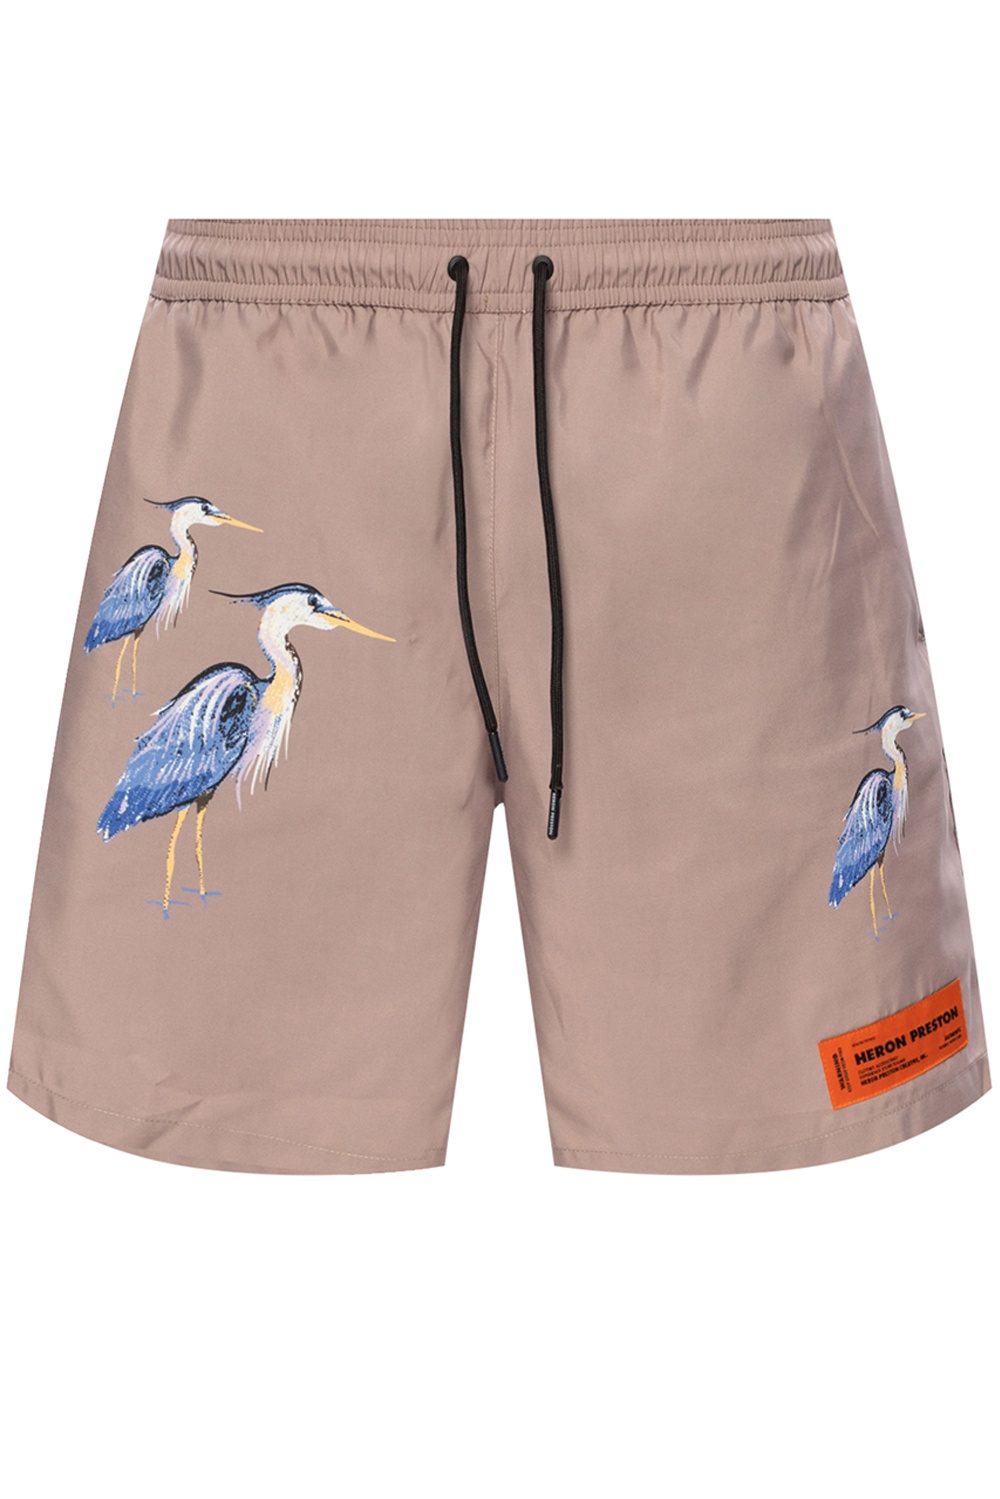 Heron Preston Boutique Slim Pants